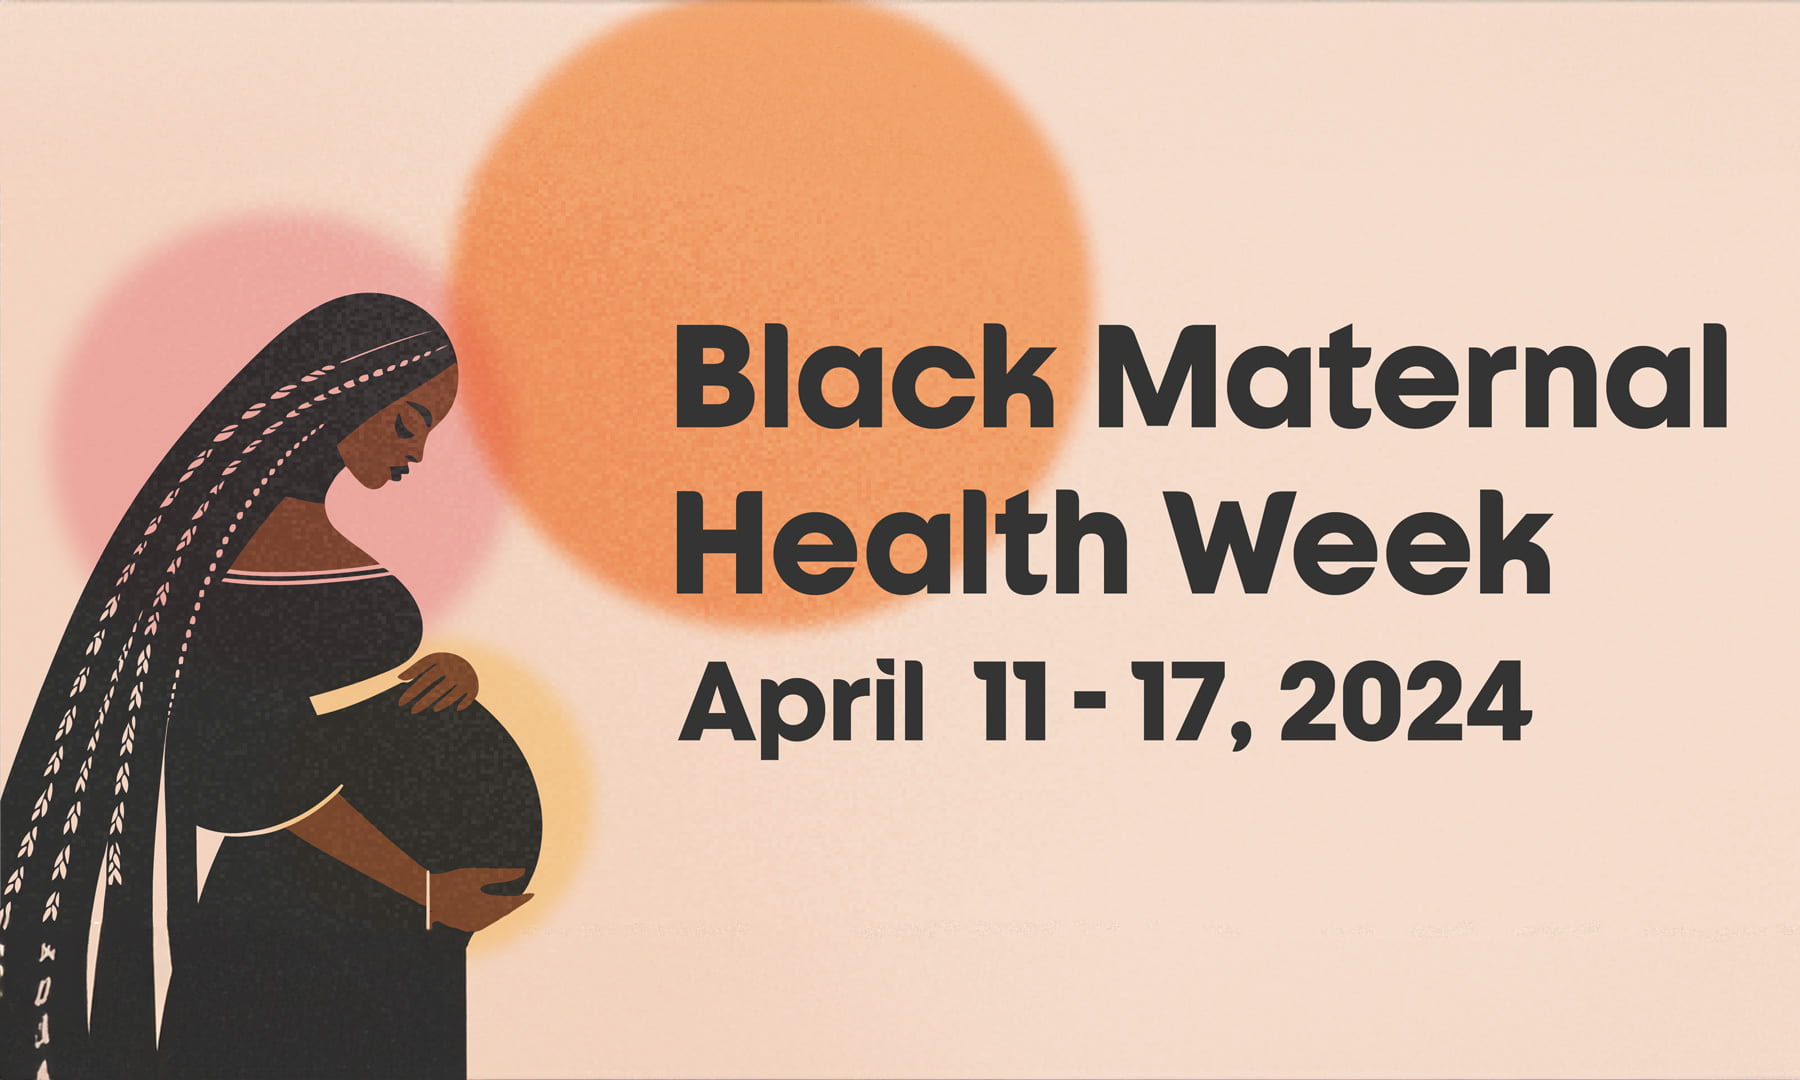 Black Maternal Health Week runs from April 11-17, 2024.